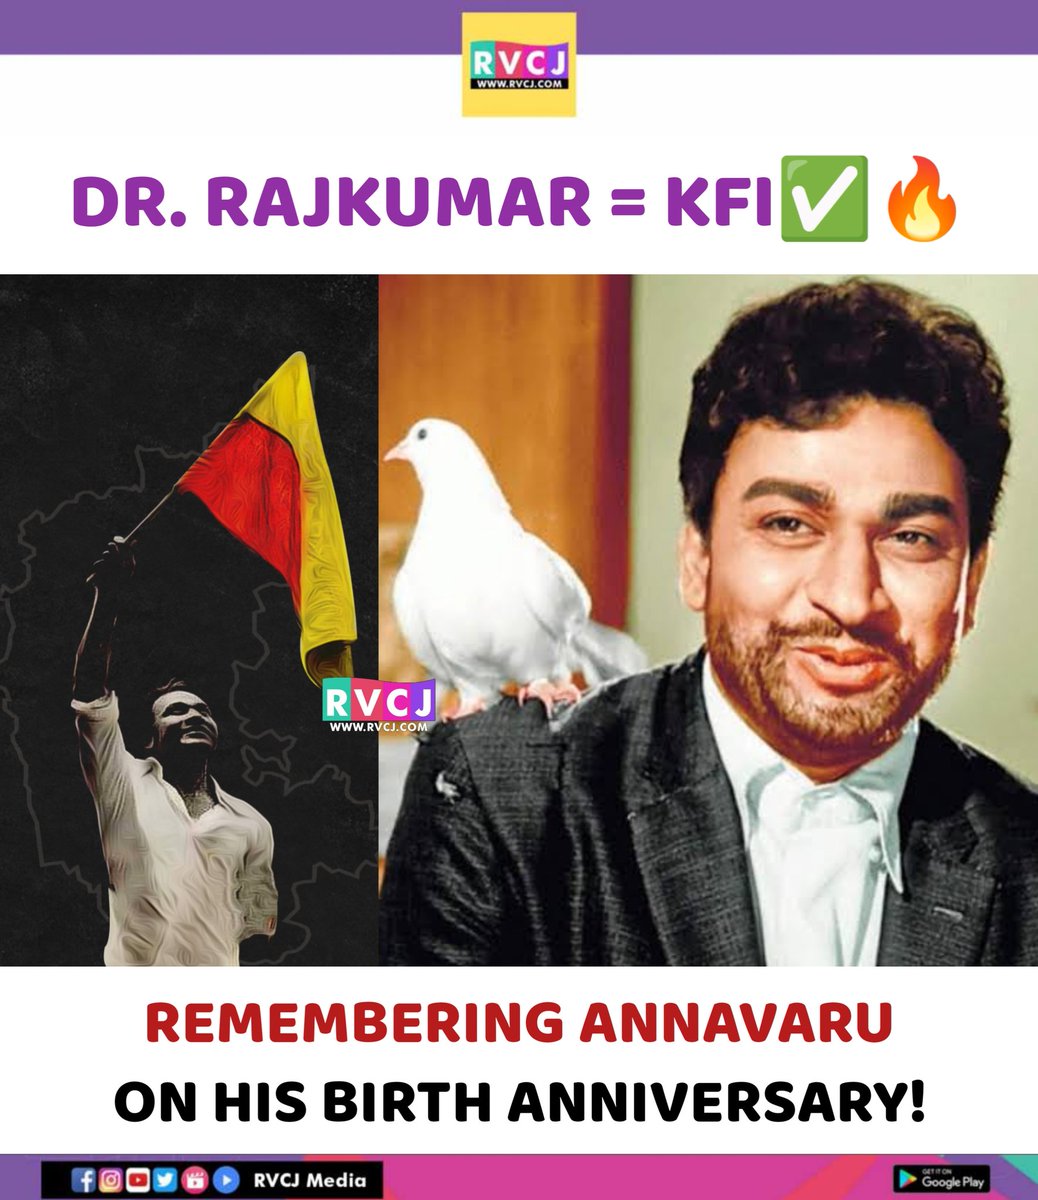 Happy Birthday Legend🔥😎 #DrRajkumar #Kannada #Rajkumar #RvcjKannada